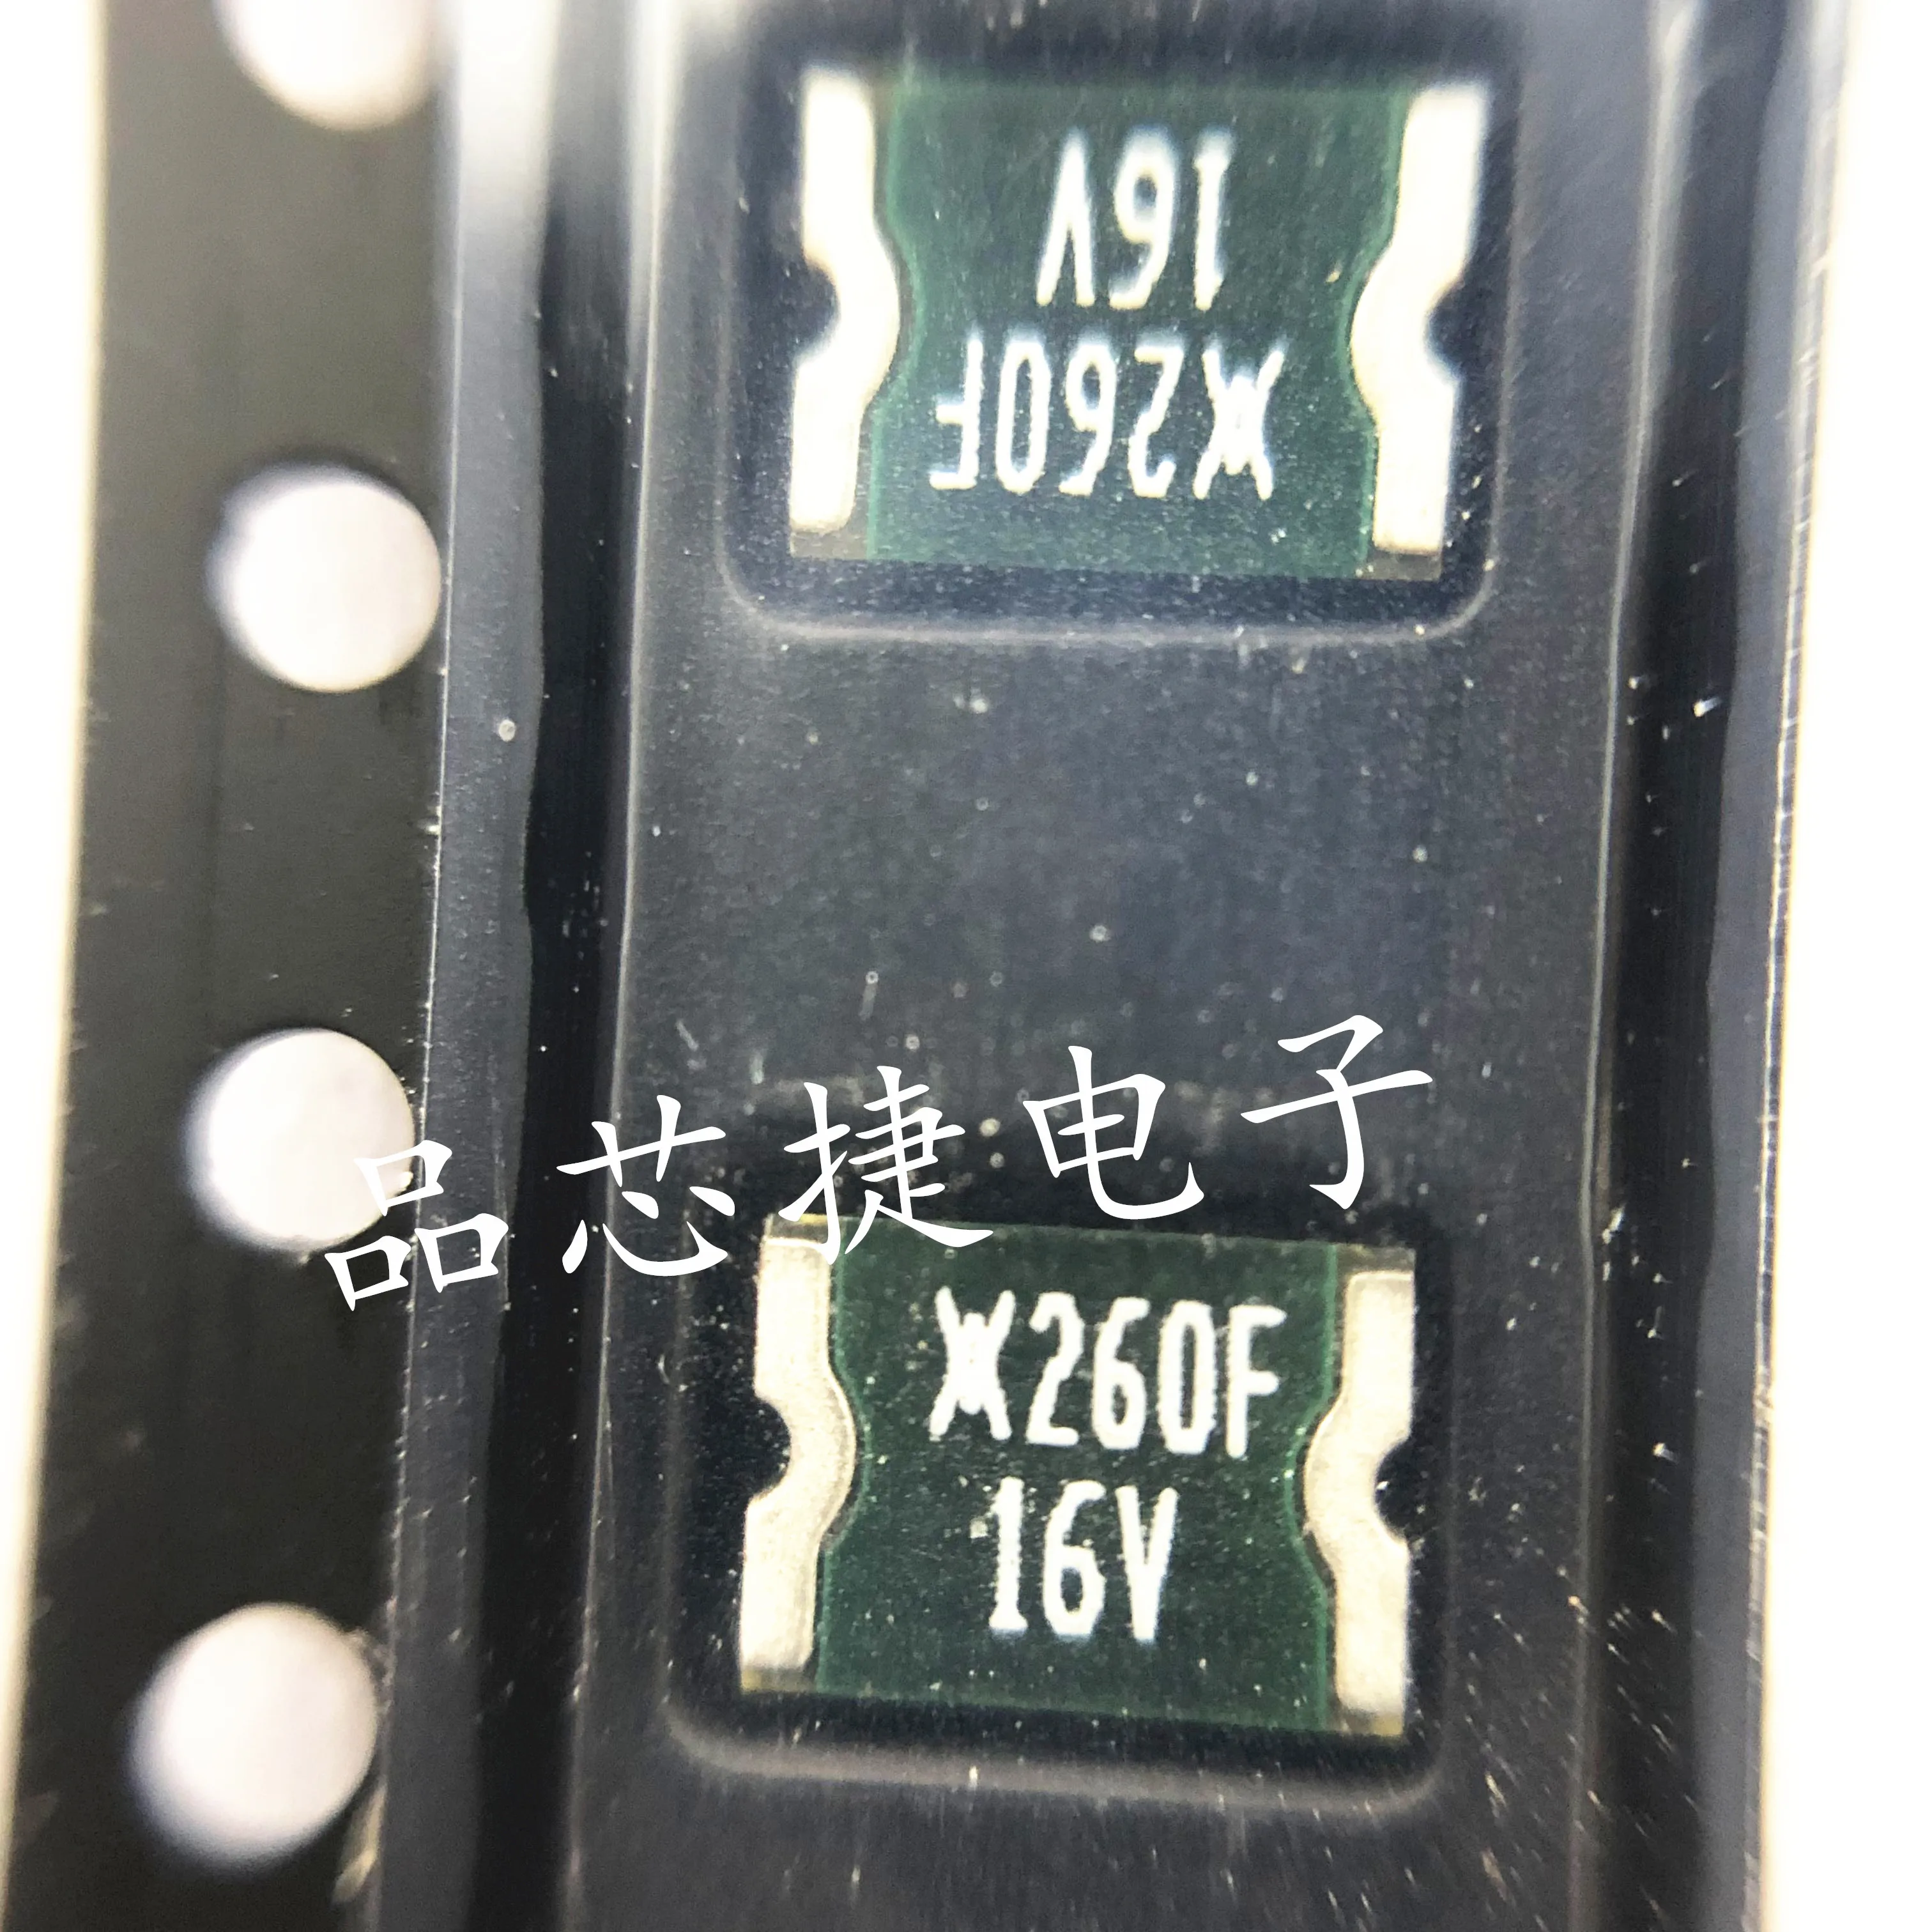 

10pcs orginal new MINISMDC260F/162 SMD 1812 16V 2.6A PTC resettable fuse